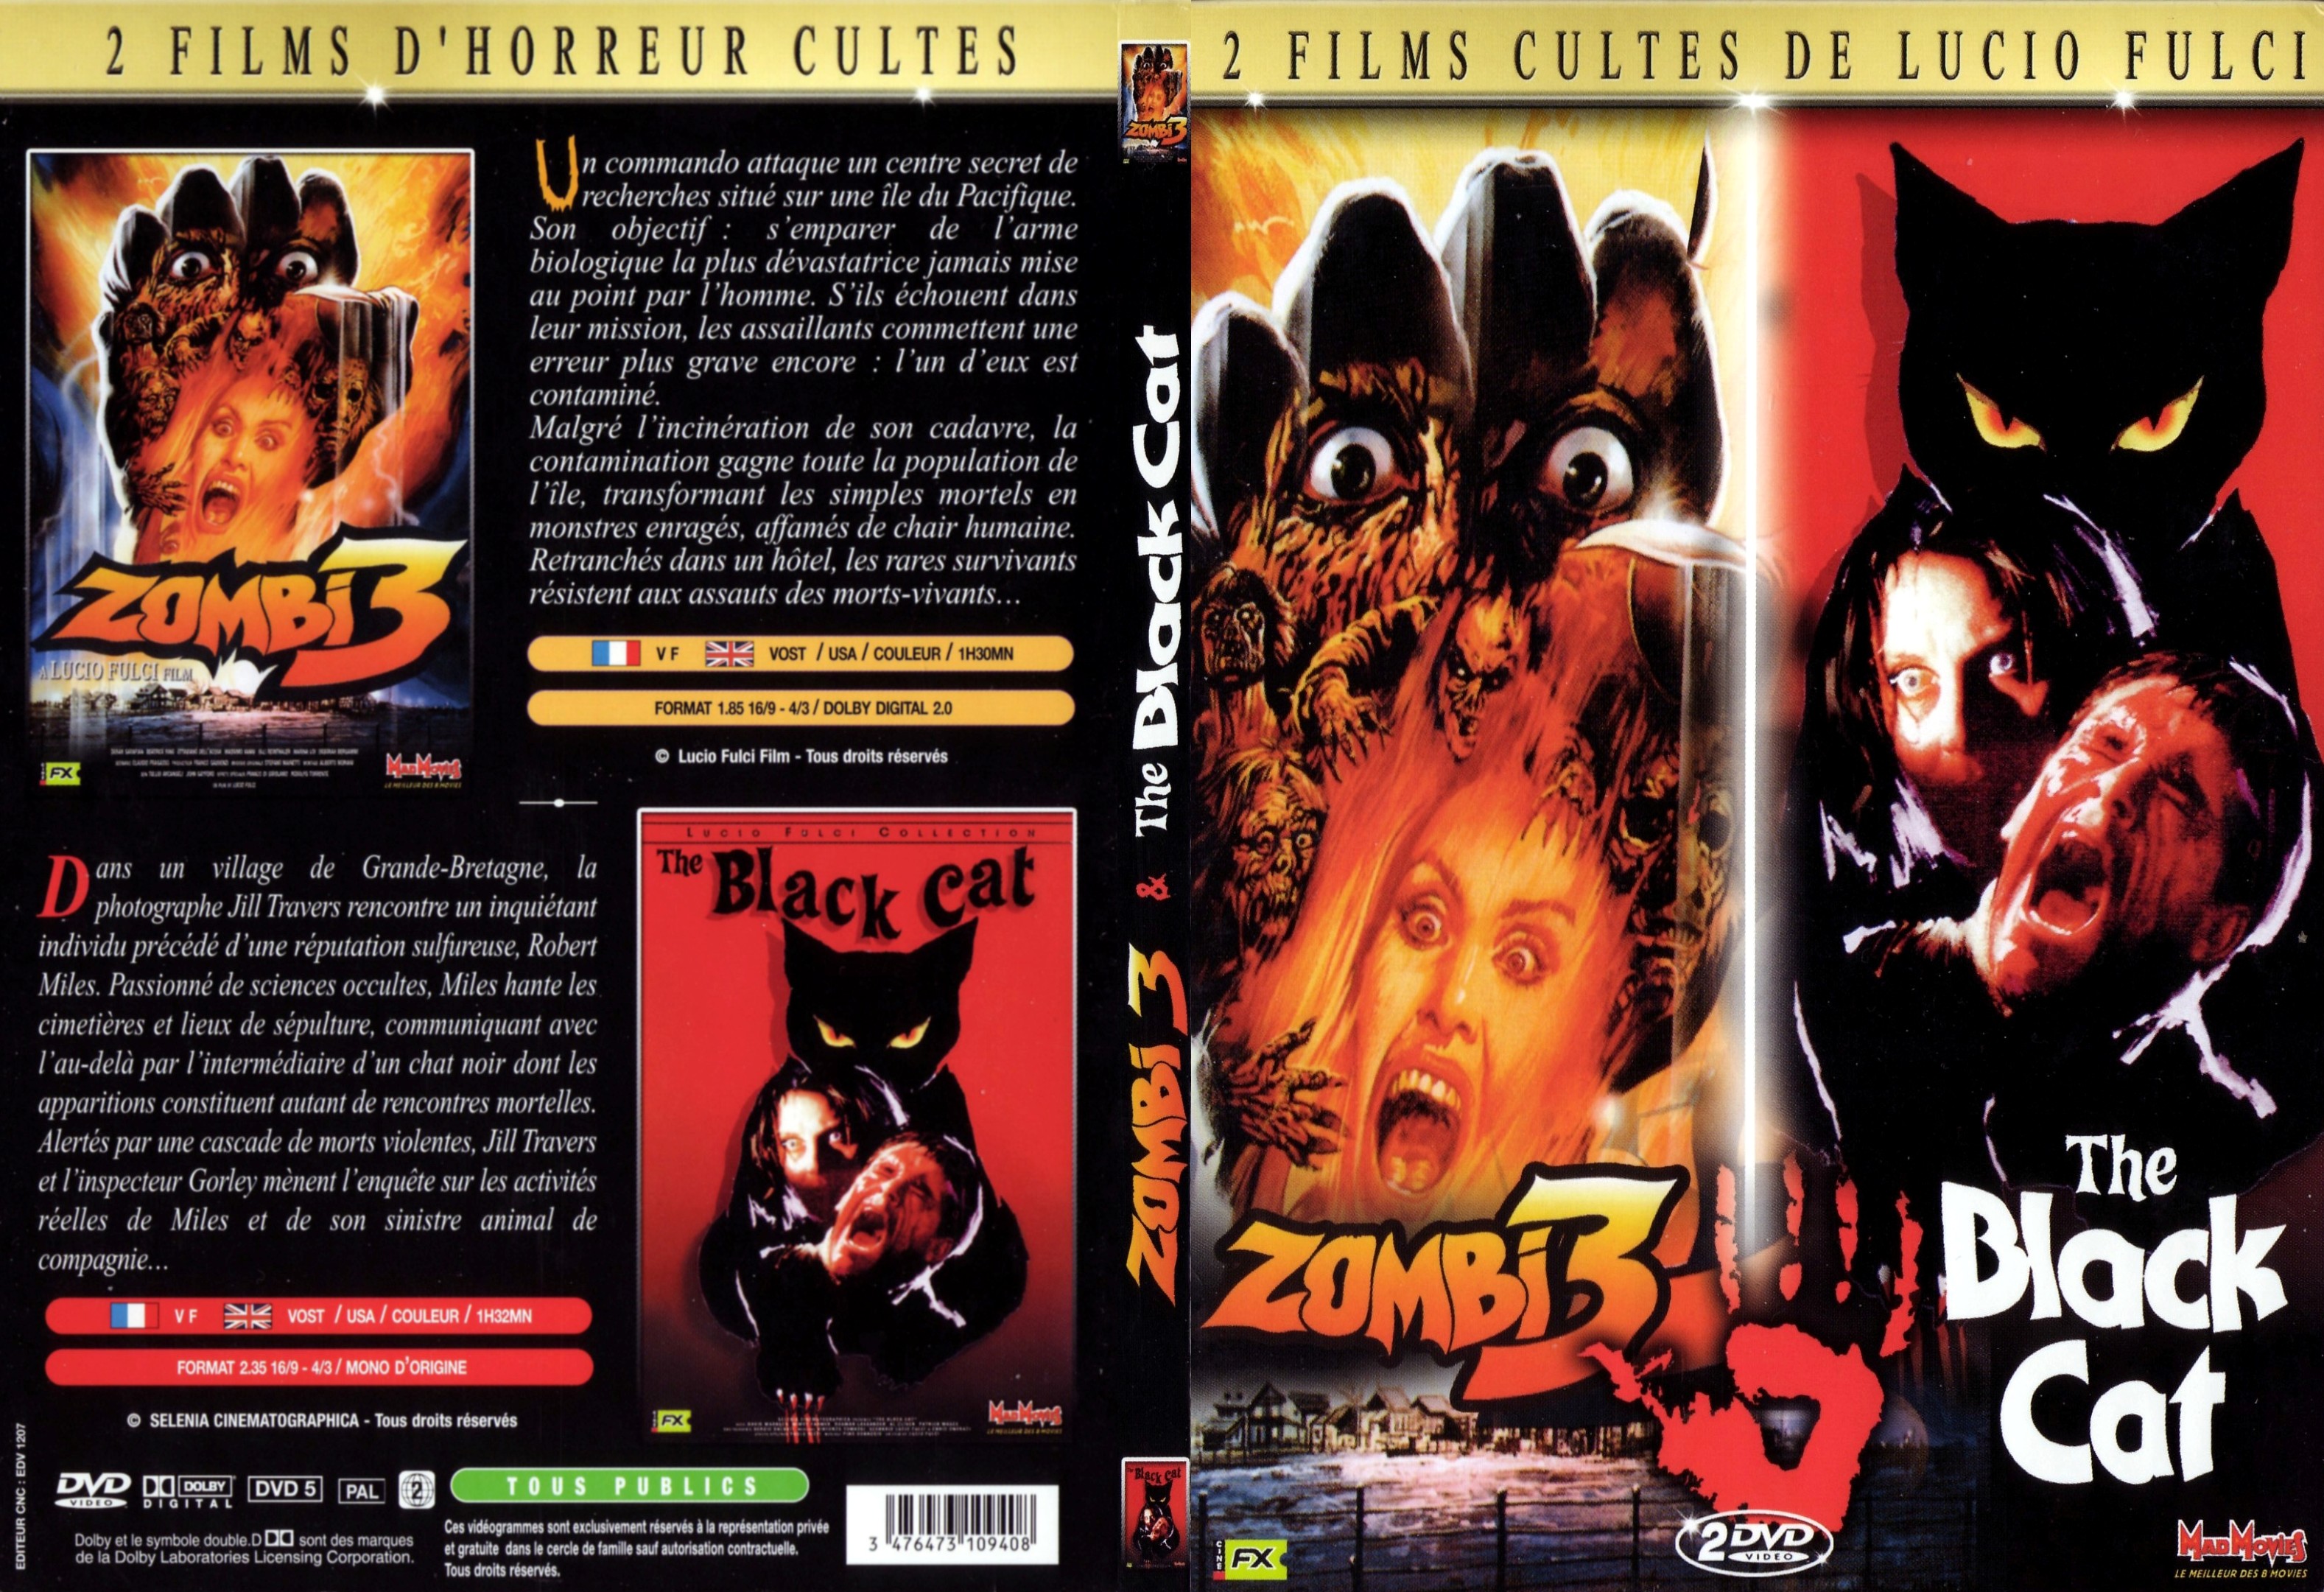 Jaquette DVD Zombi 3 + The black cat - SLIM v2